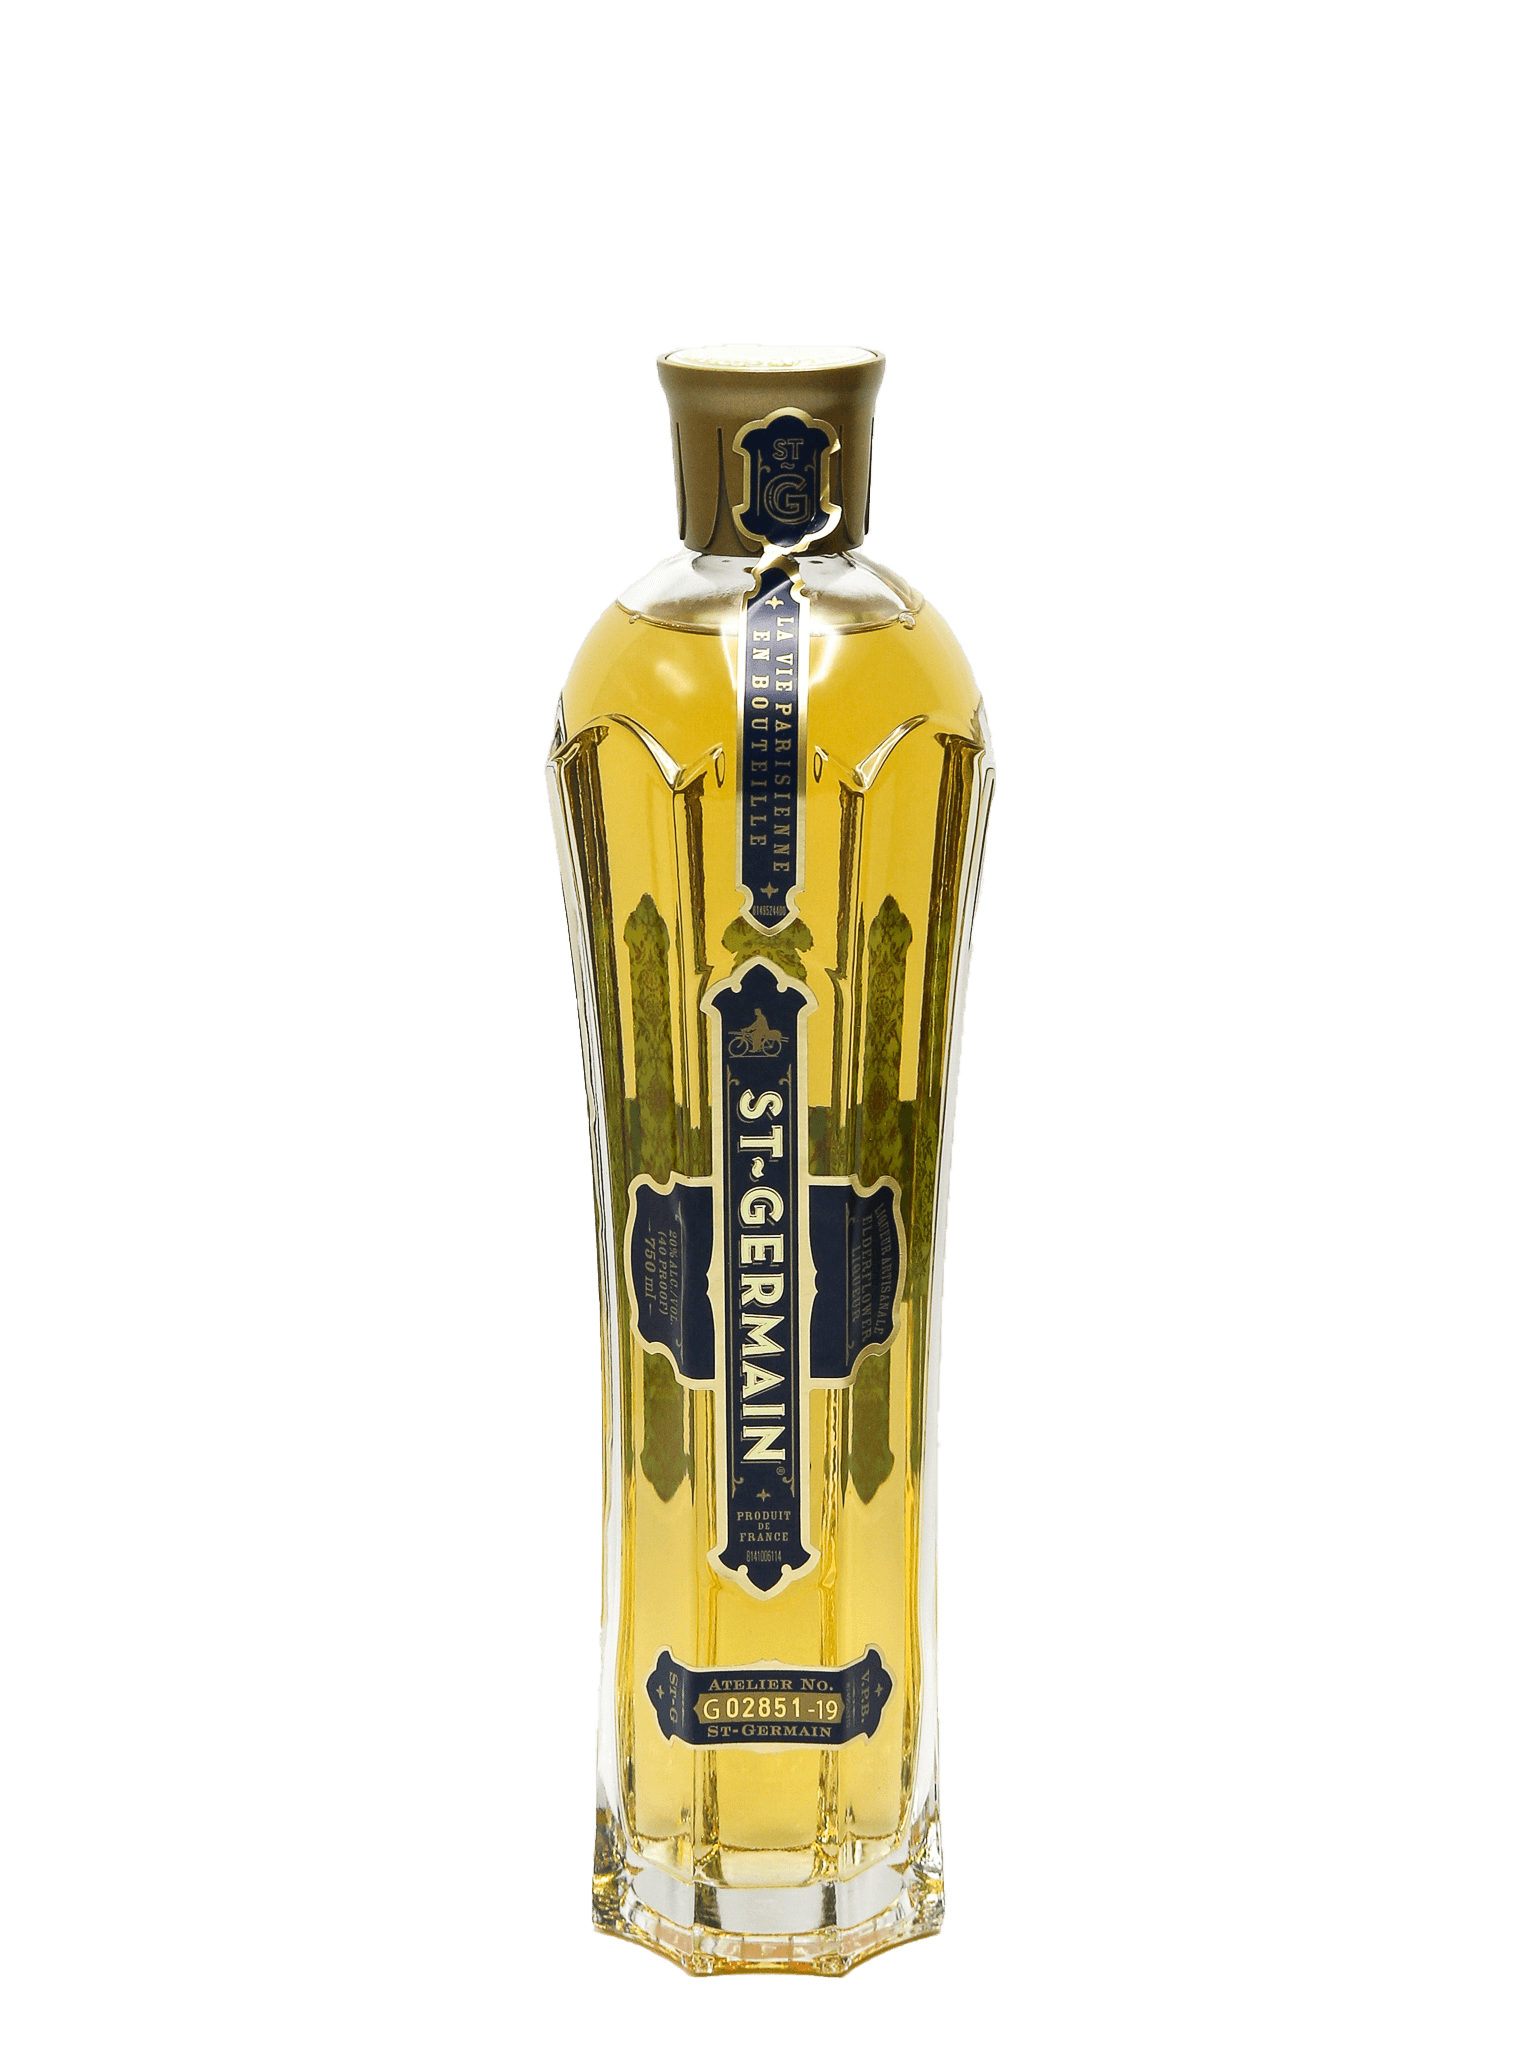 St. Germain - Elderflower Liqueur - Bottle Grove